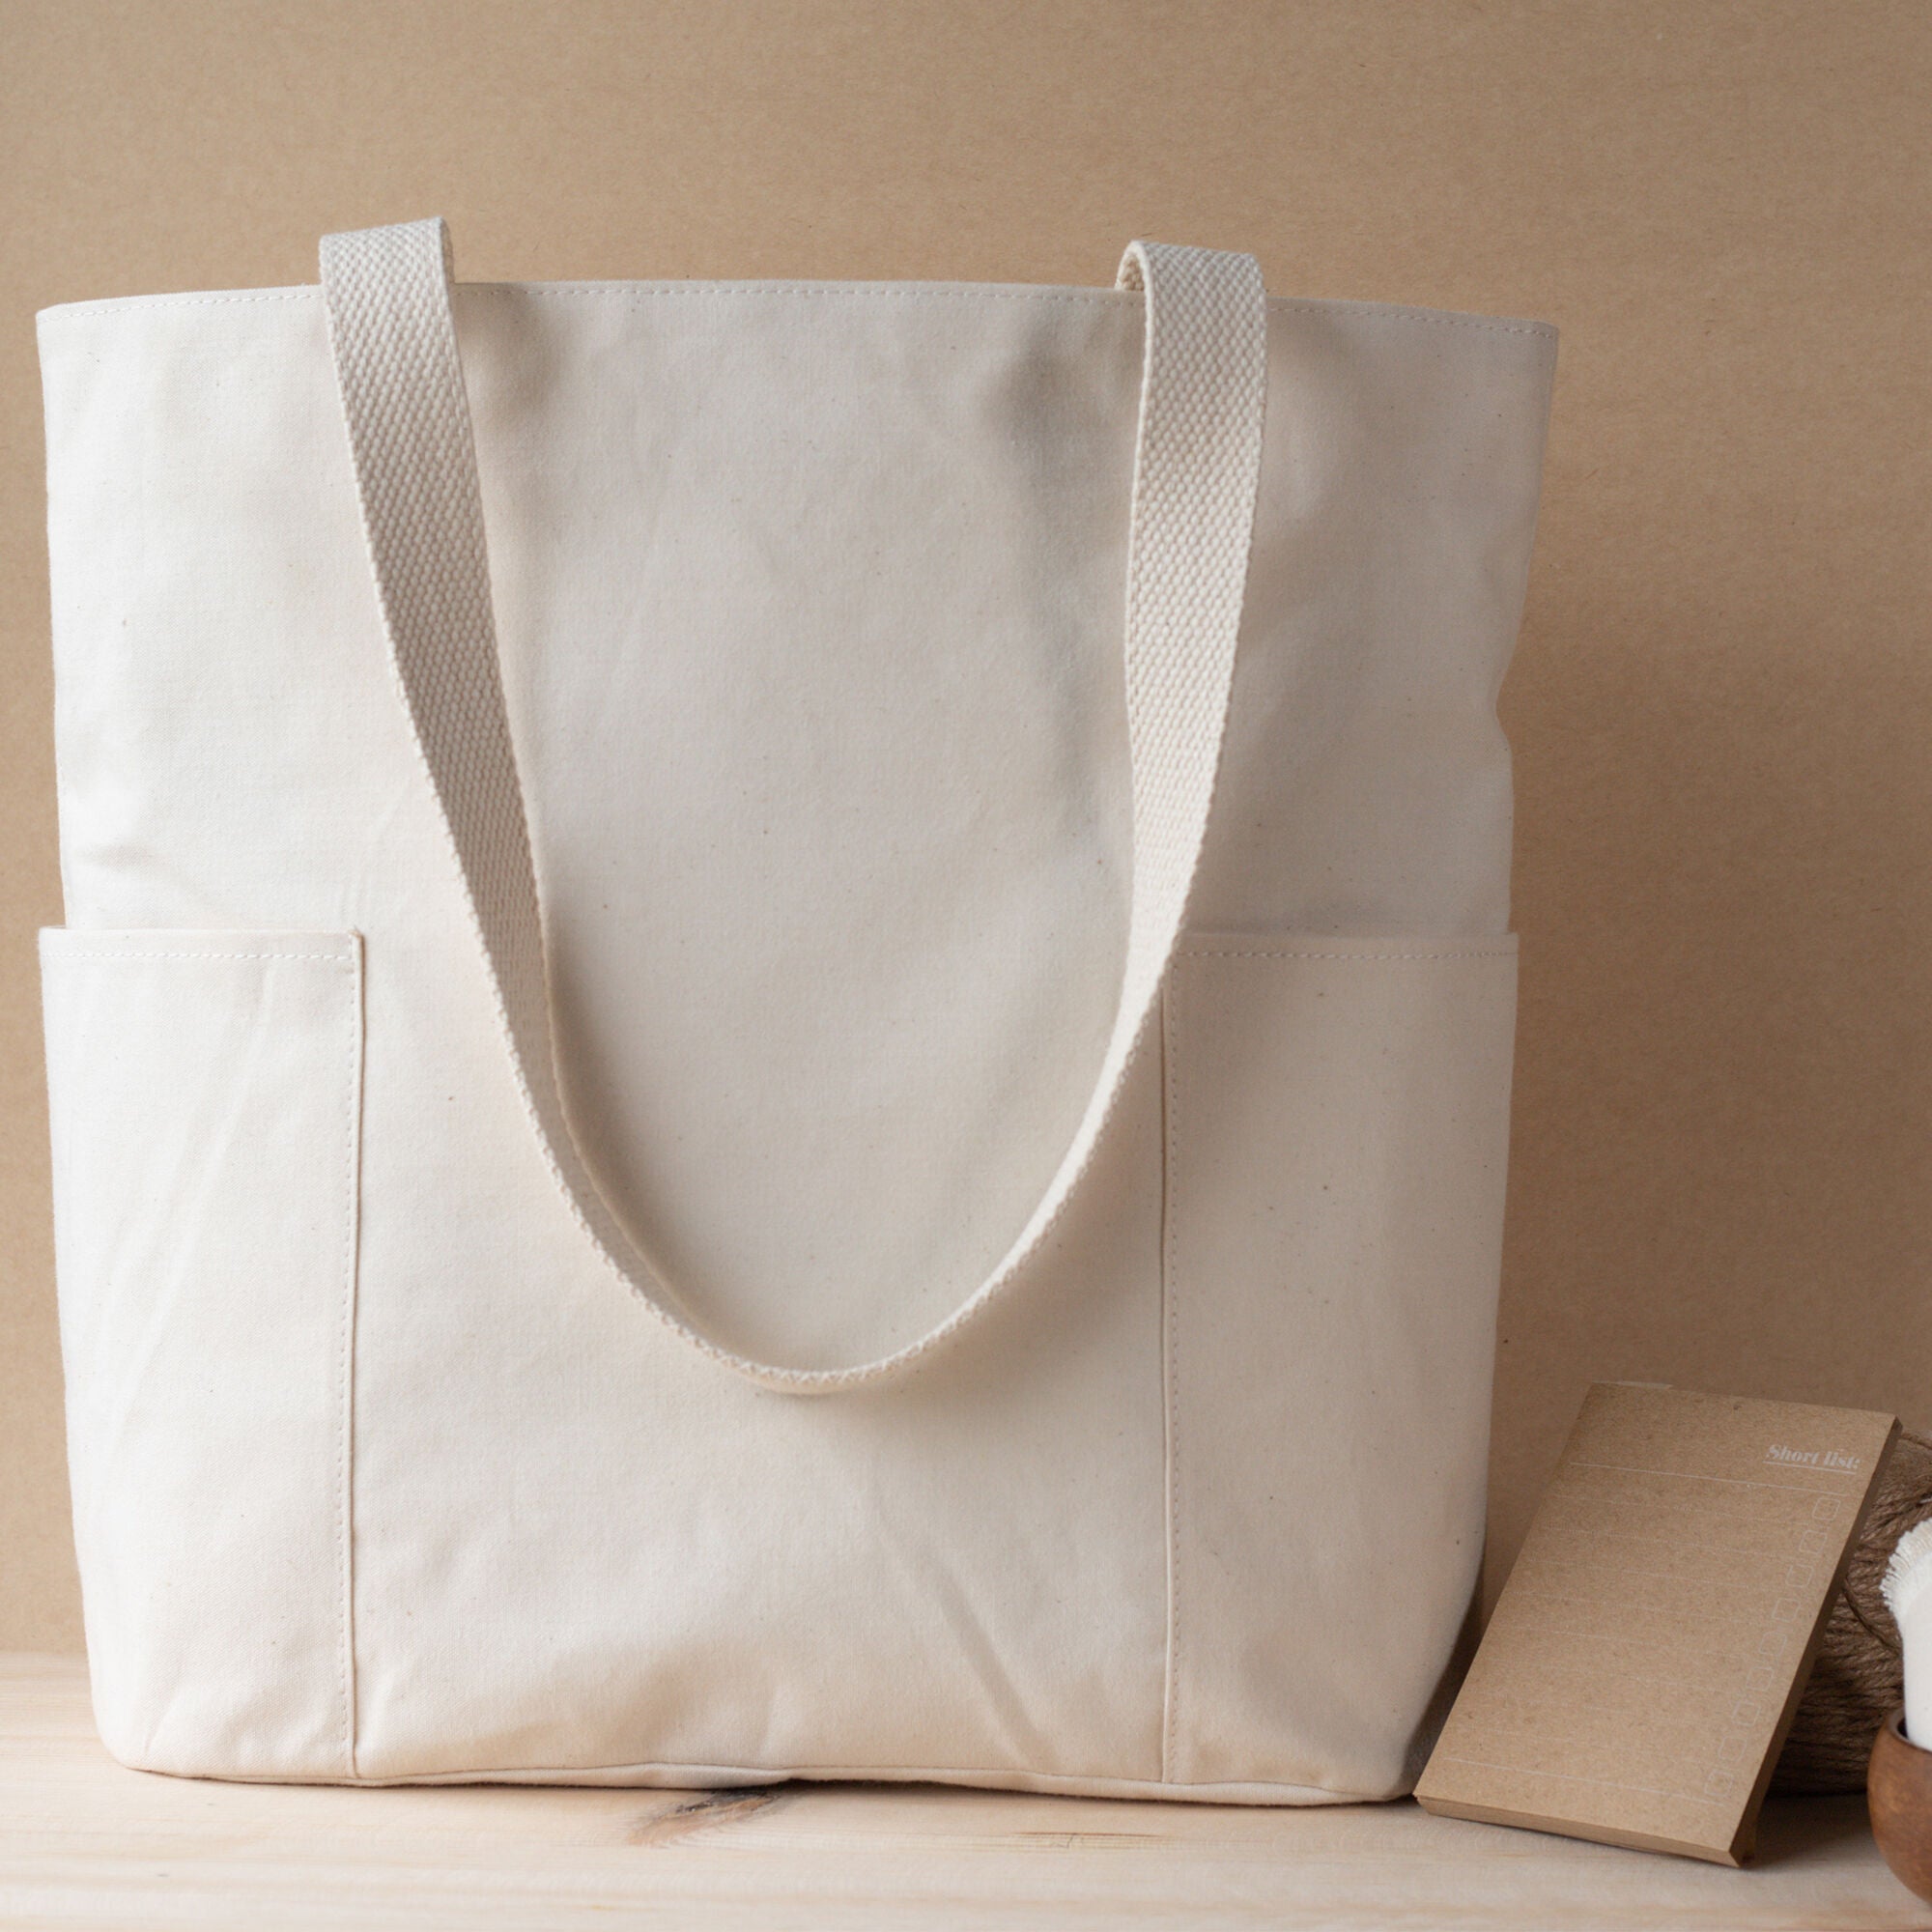 Buy Original shopping bags online | Eco-friendly womens shopping bags ...